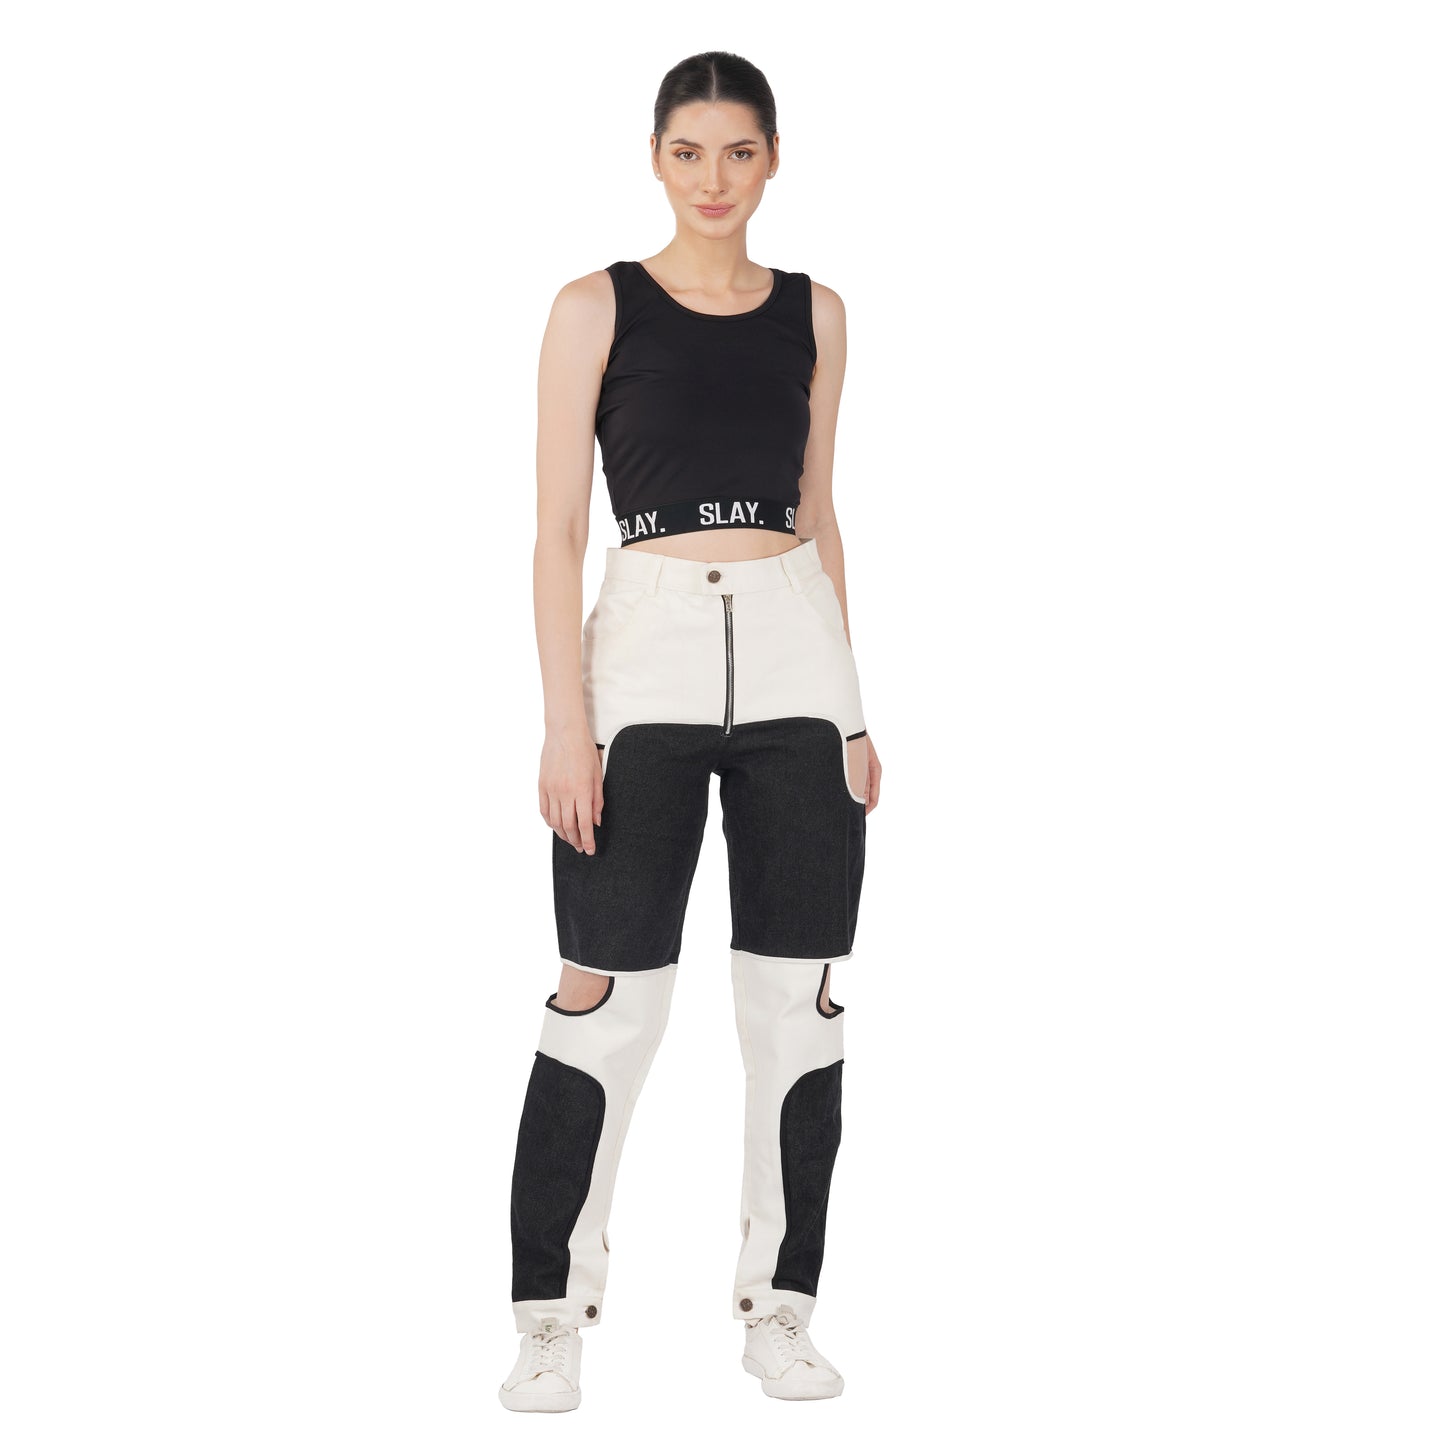 SLAY. Women's Side Cutout Black & White Colorblock Denim Jeans